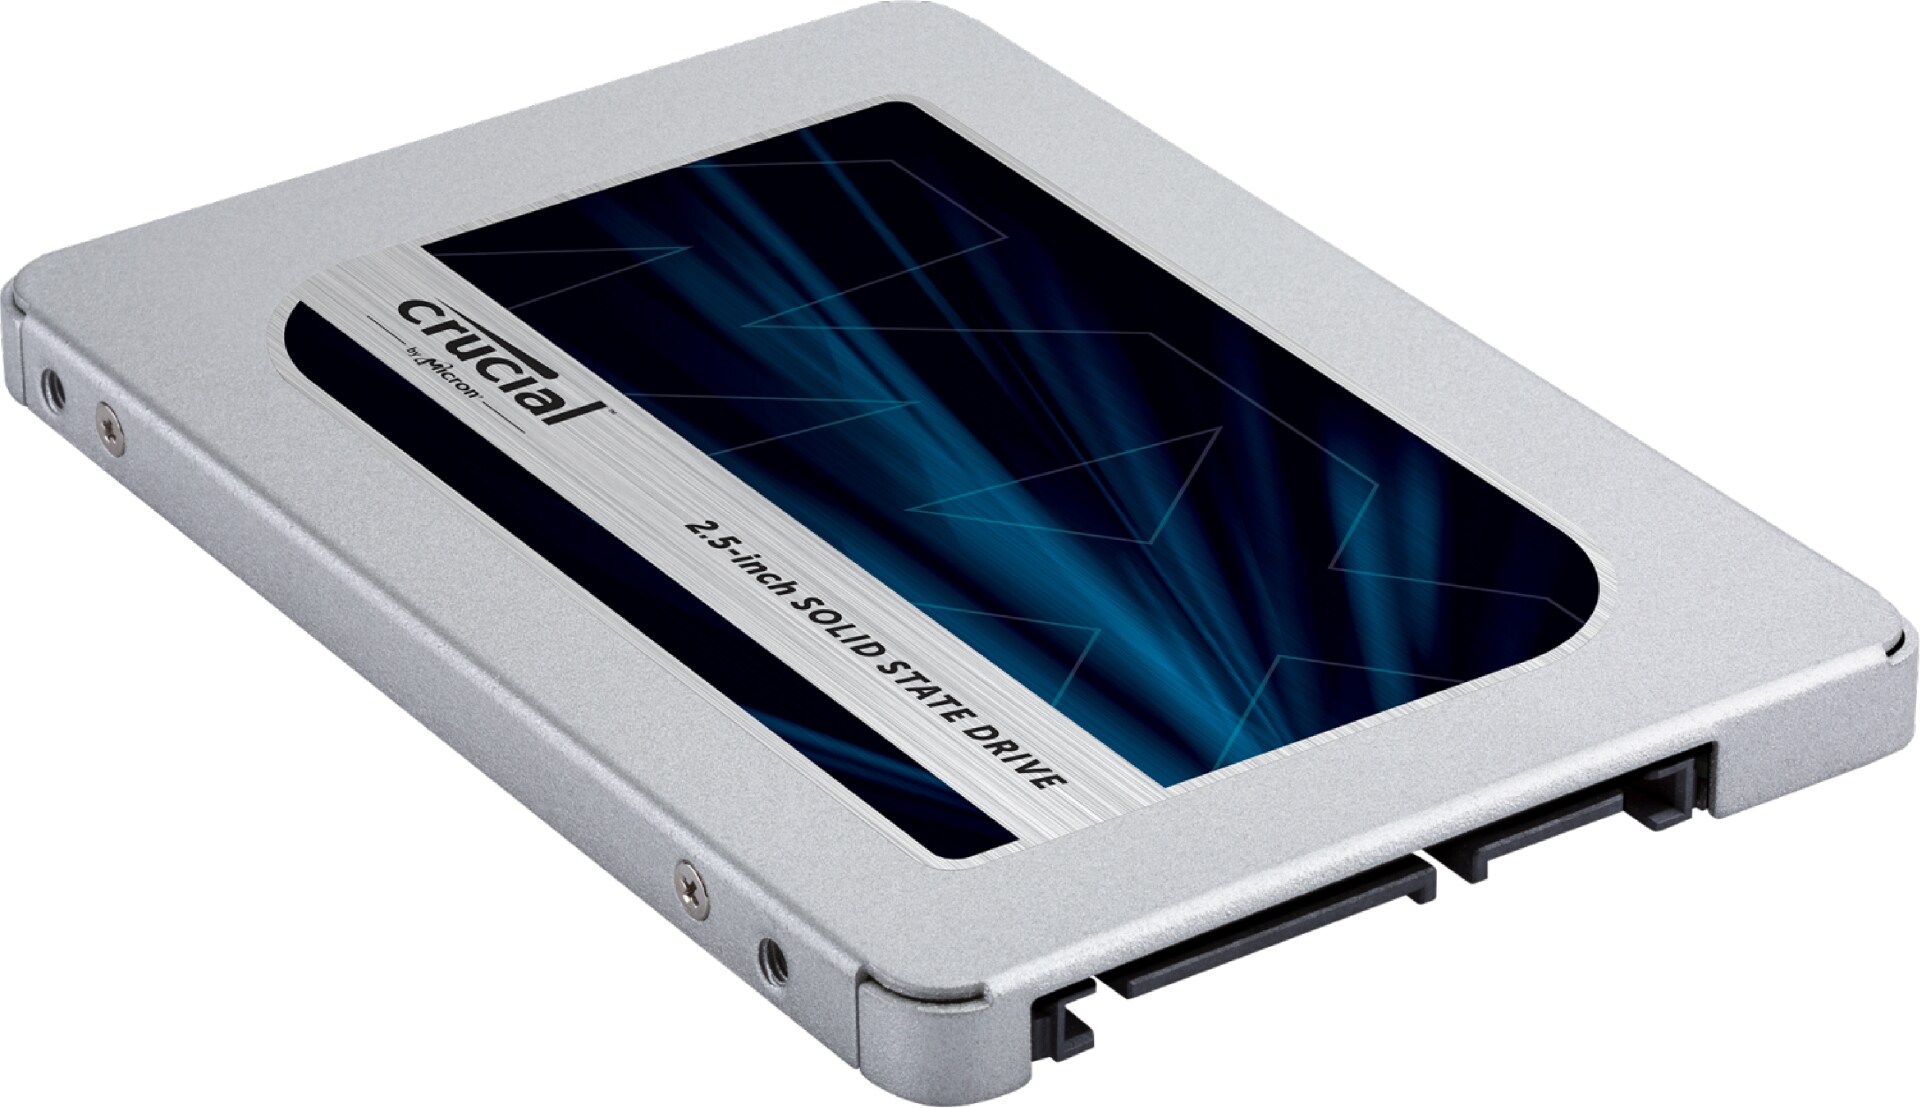 Crucial MX200 250 GB Internal SSD